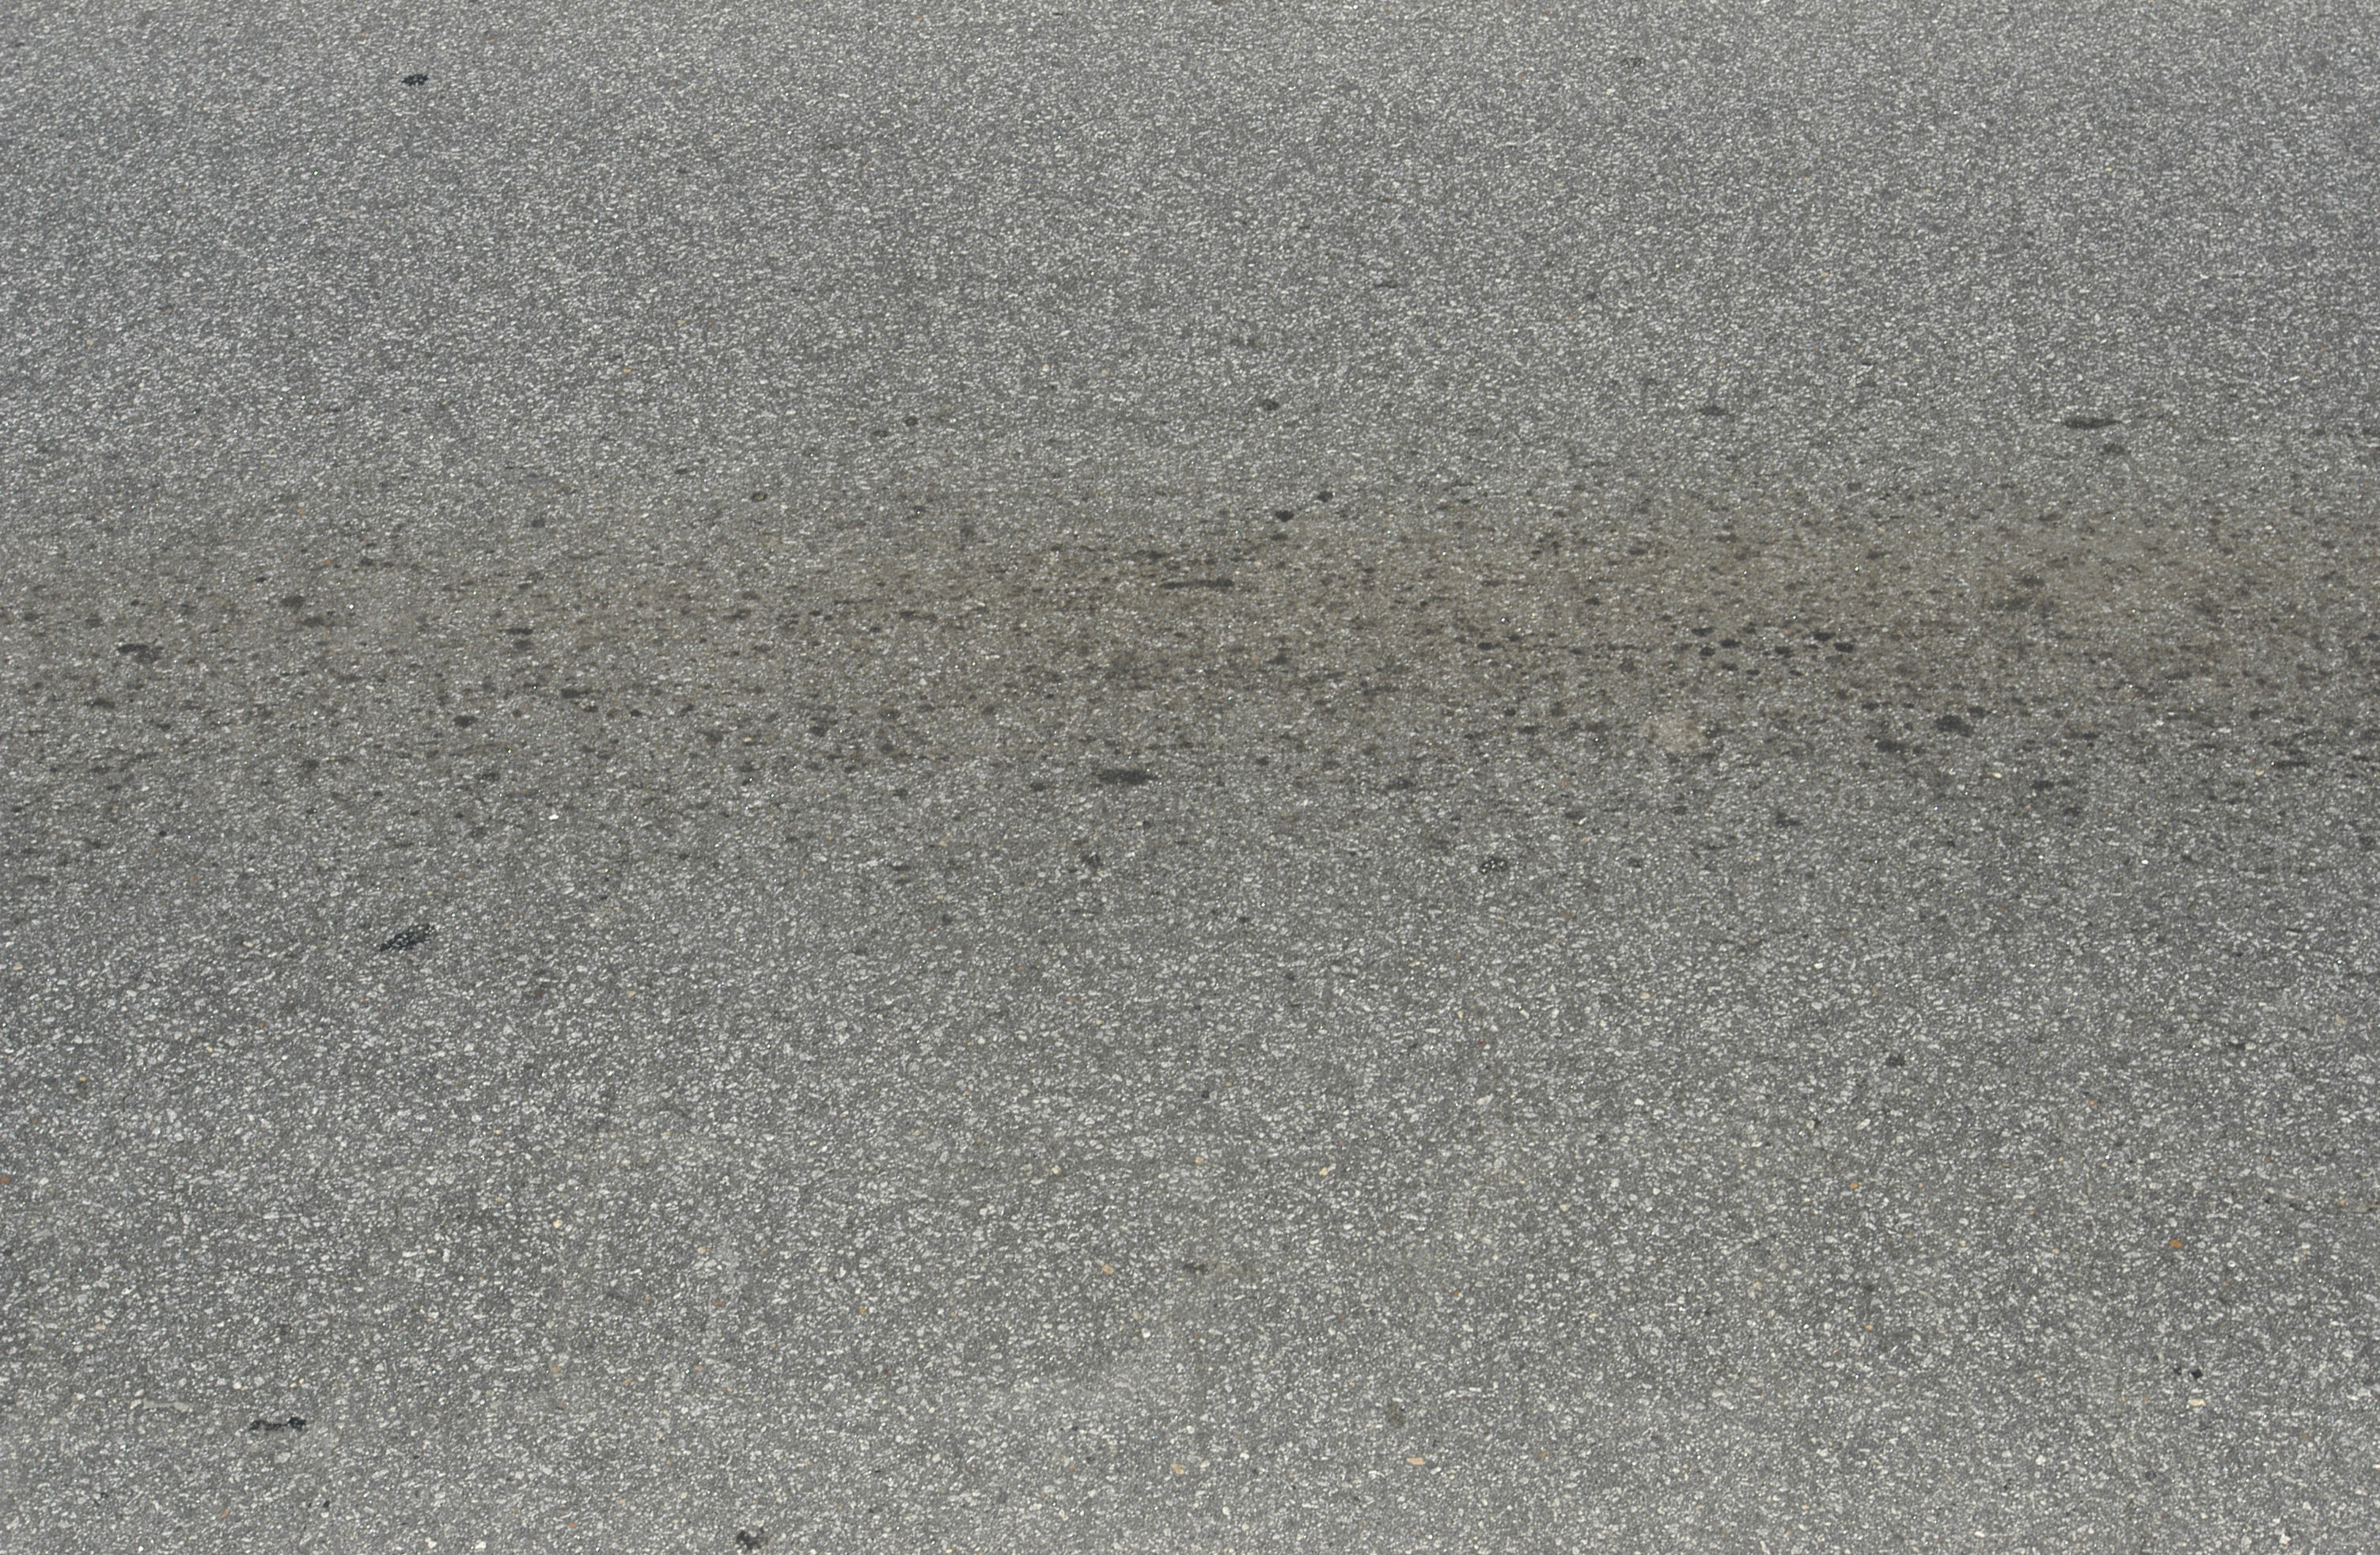 Smooth gray asphalt texture photo backgrounds